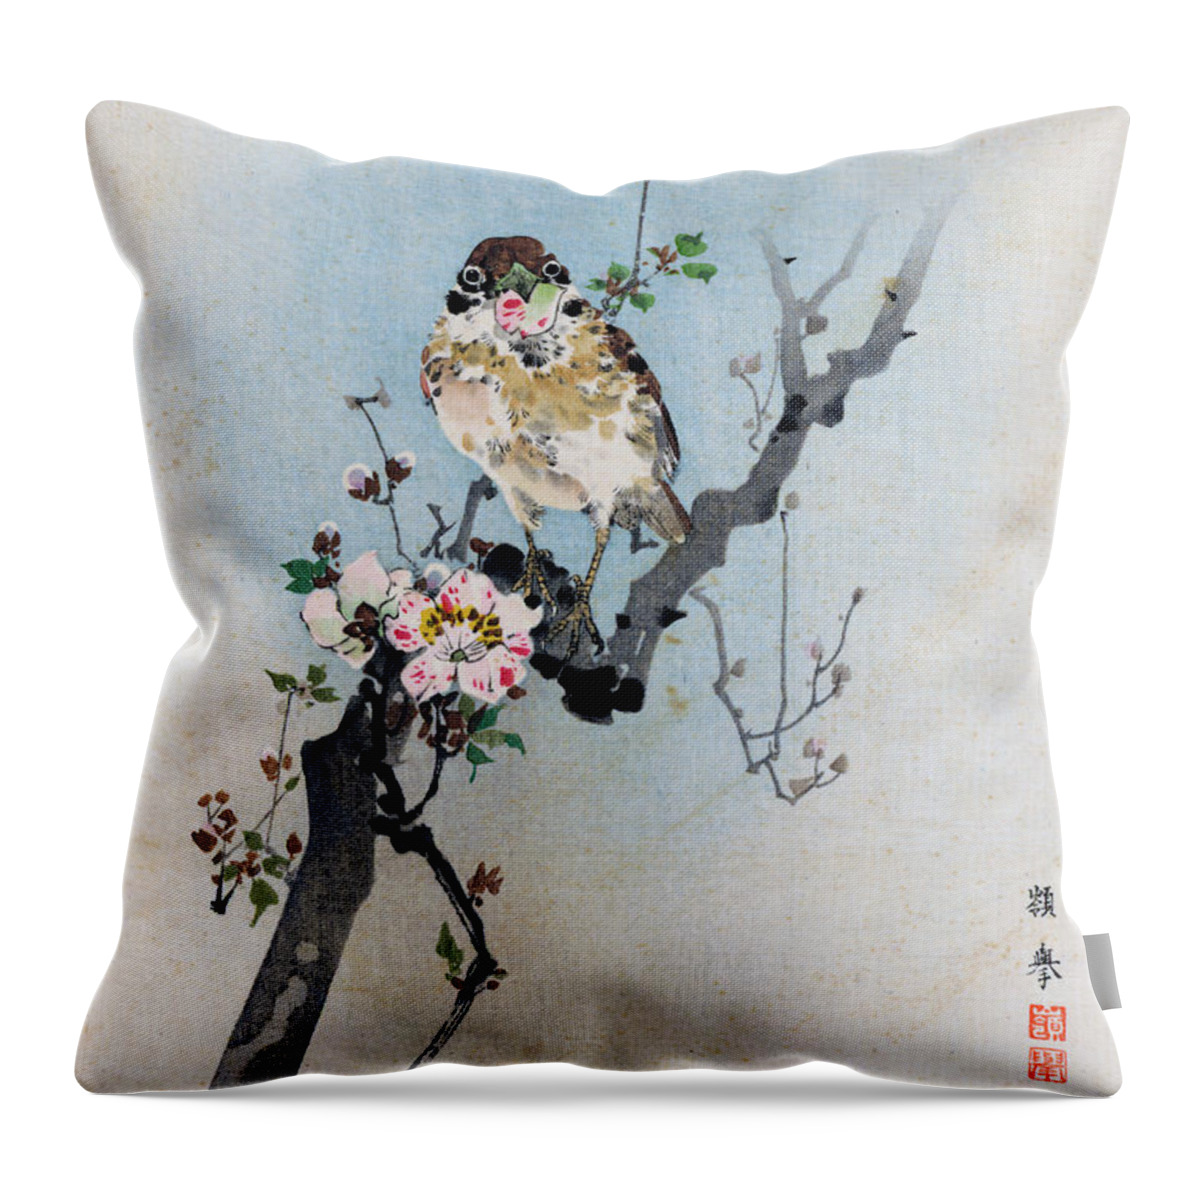 Rioko Throw Pillow featuring the painting Bird and Petal by Rioko